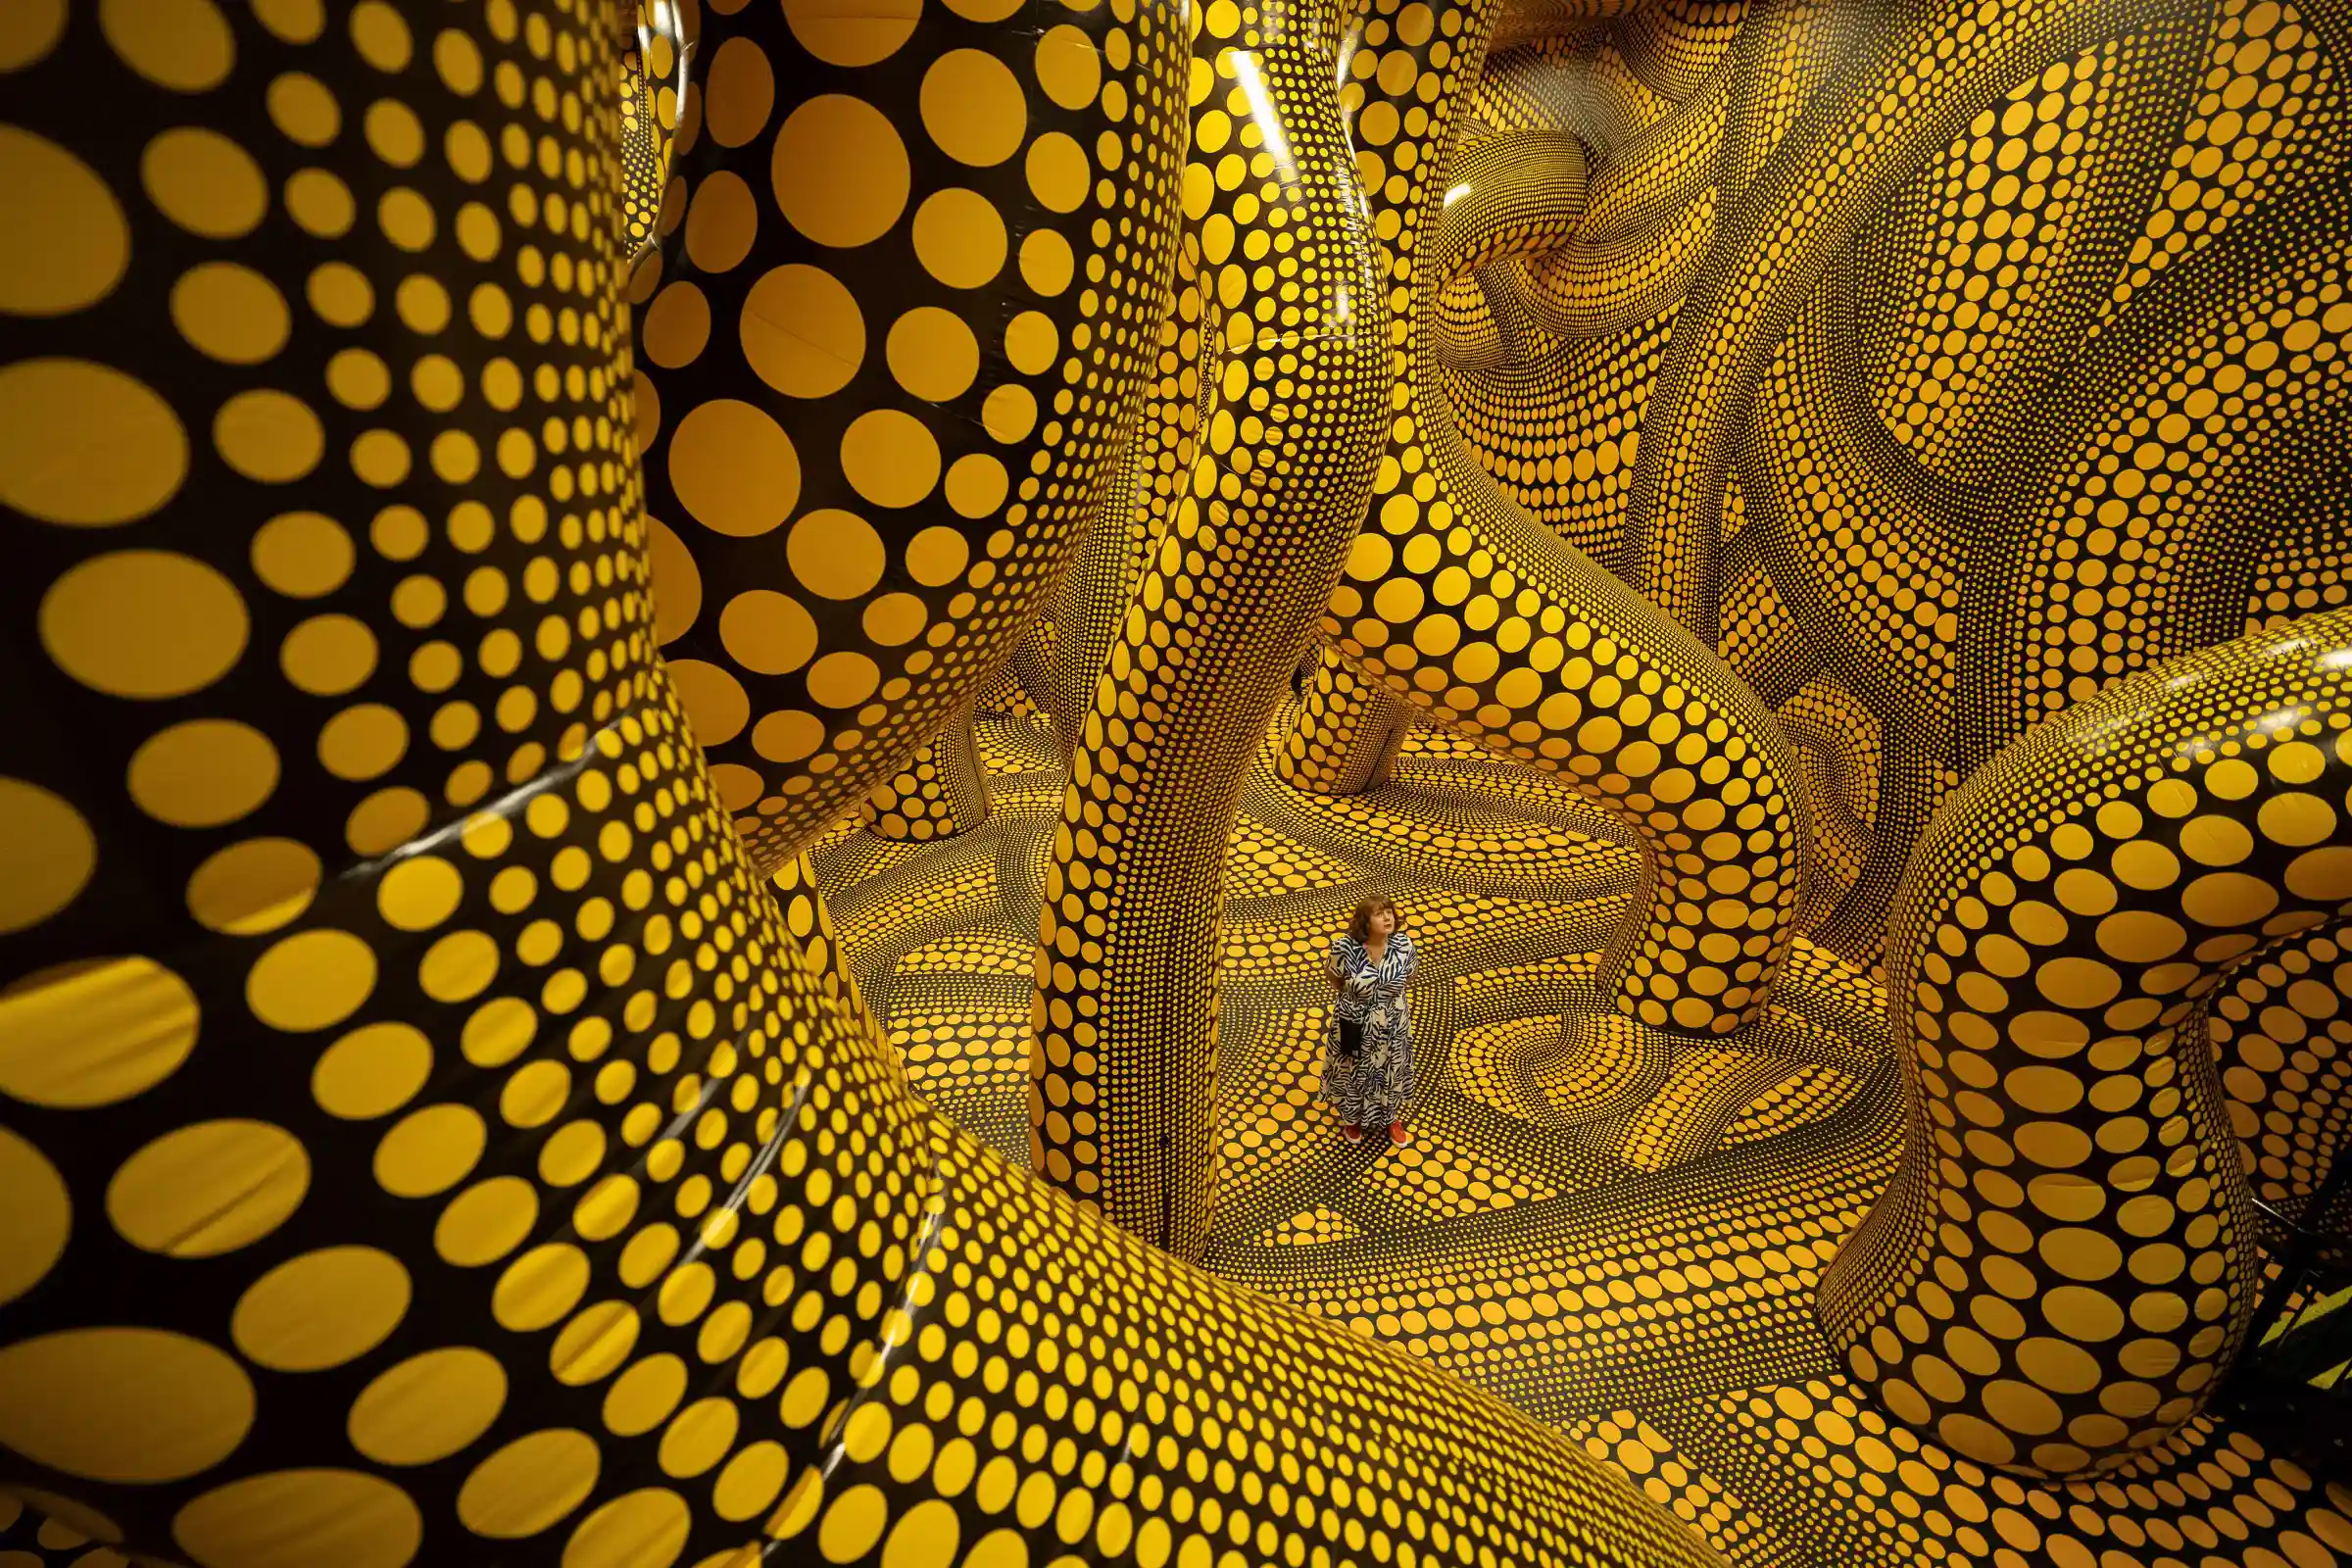 Une femme admire une œuvre d'art intitulée « The Hope of the Polka Dots Buried in Infinity Will Eternally Cover the Universe » qui figure dans une exposition de l'artiste japonaise Yayoi Kusama intitulée « You, Me and the Balloons » dans la galerie Aviva Studios à Manchester, dans le nord-ouest de l'Angleterre.